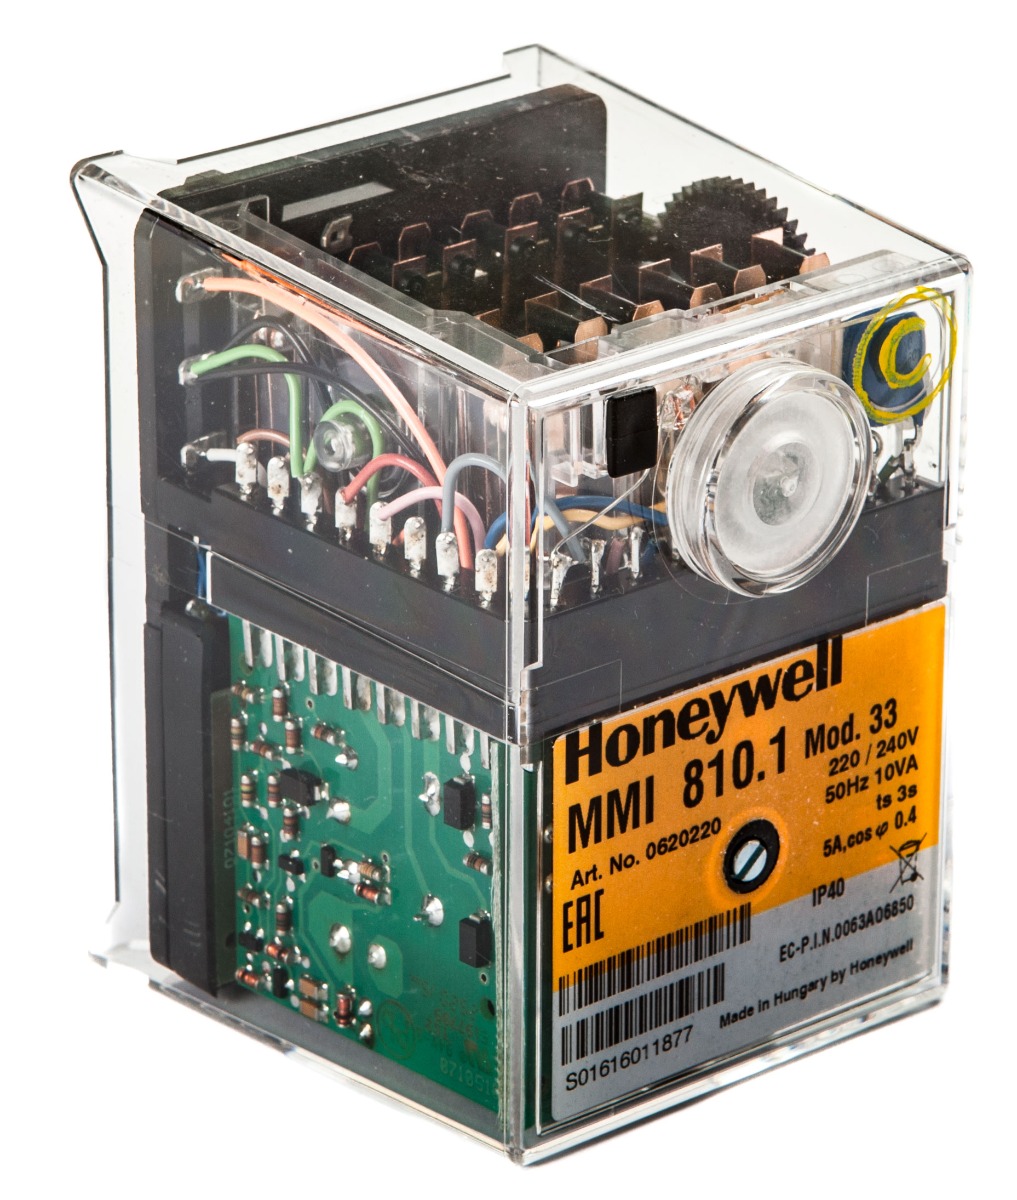 MMI 810.1 Mod 40 - 34 240v Control Box